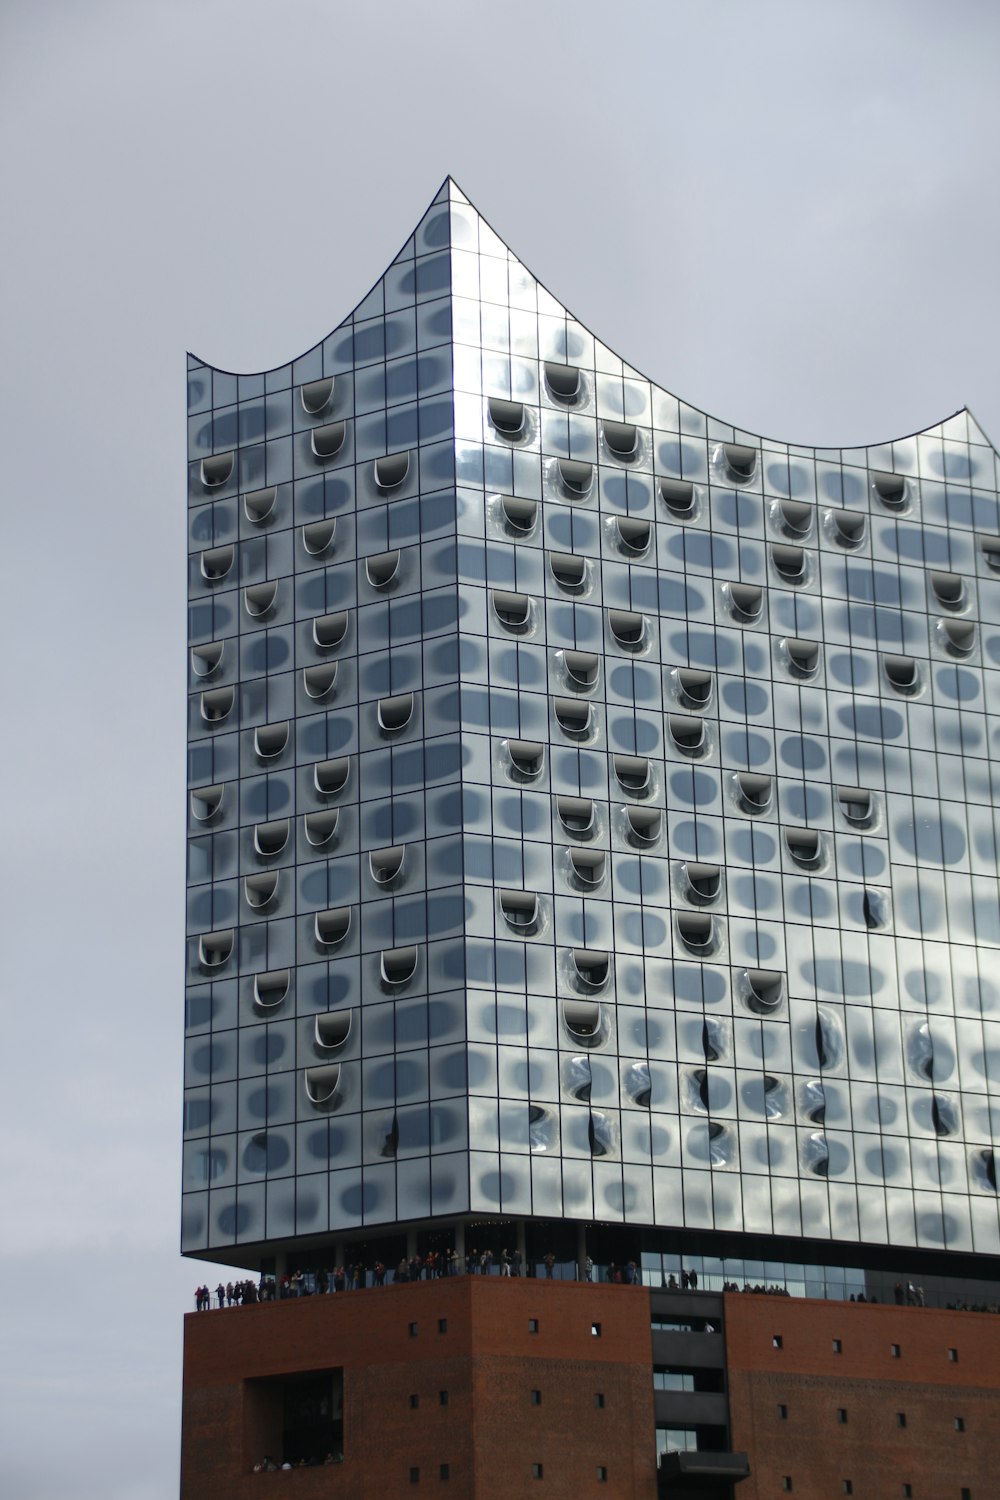 Un edificio alto con muchas ventanas